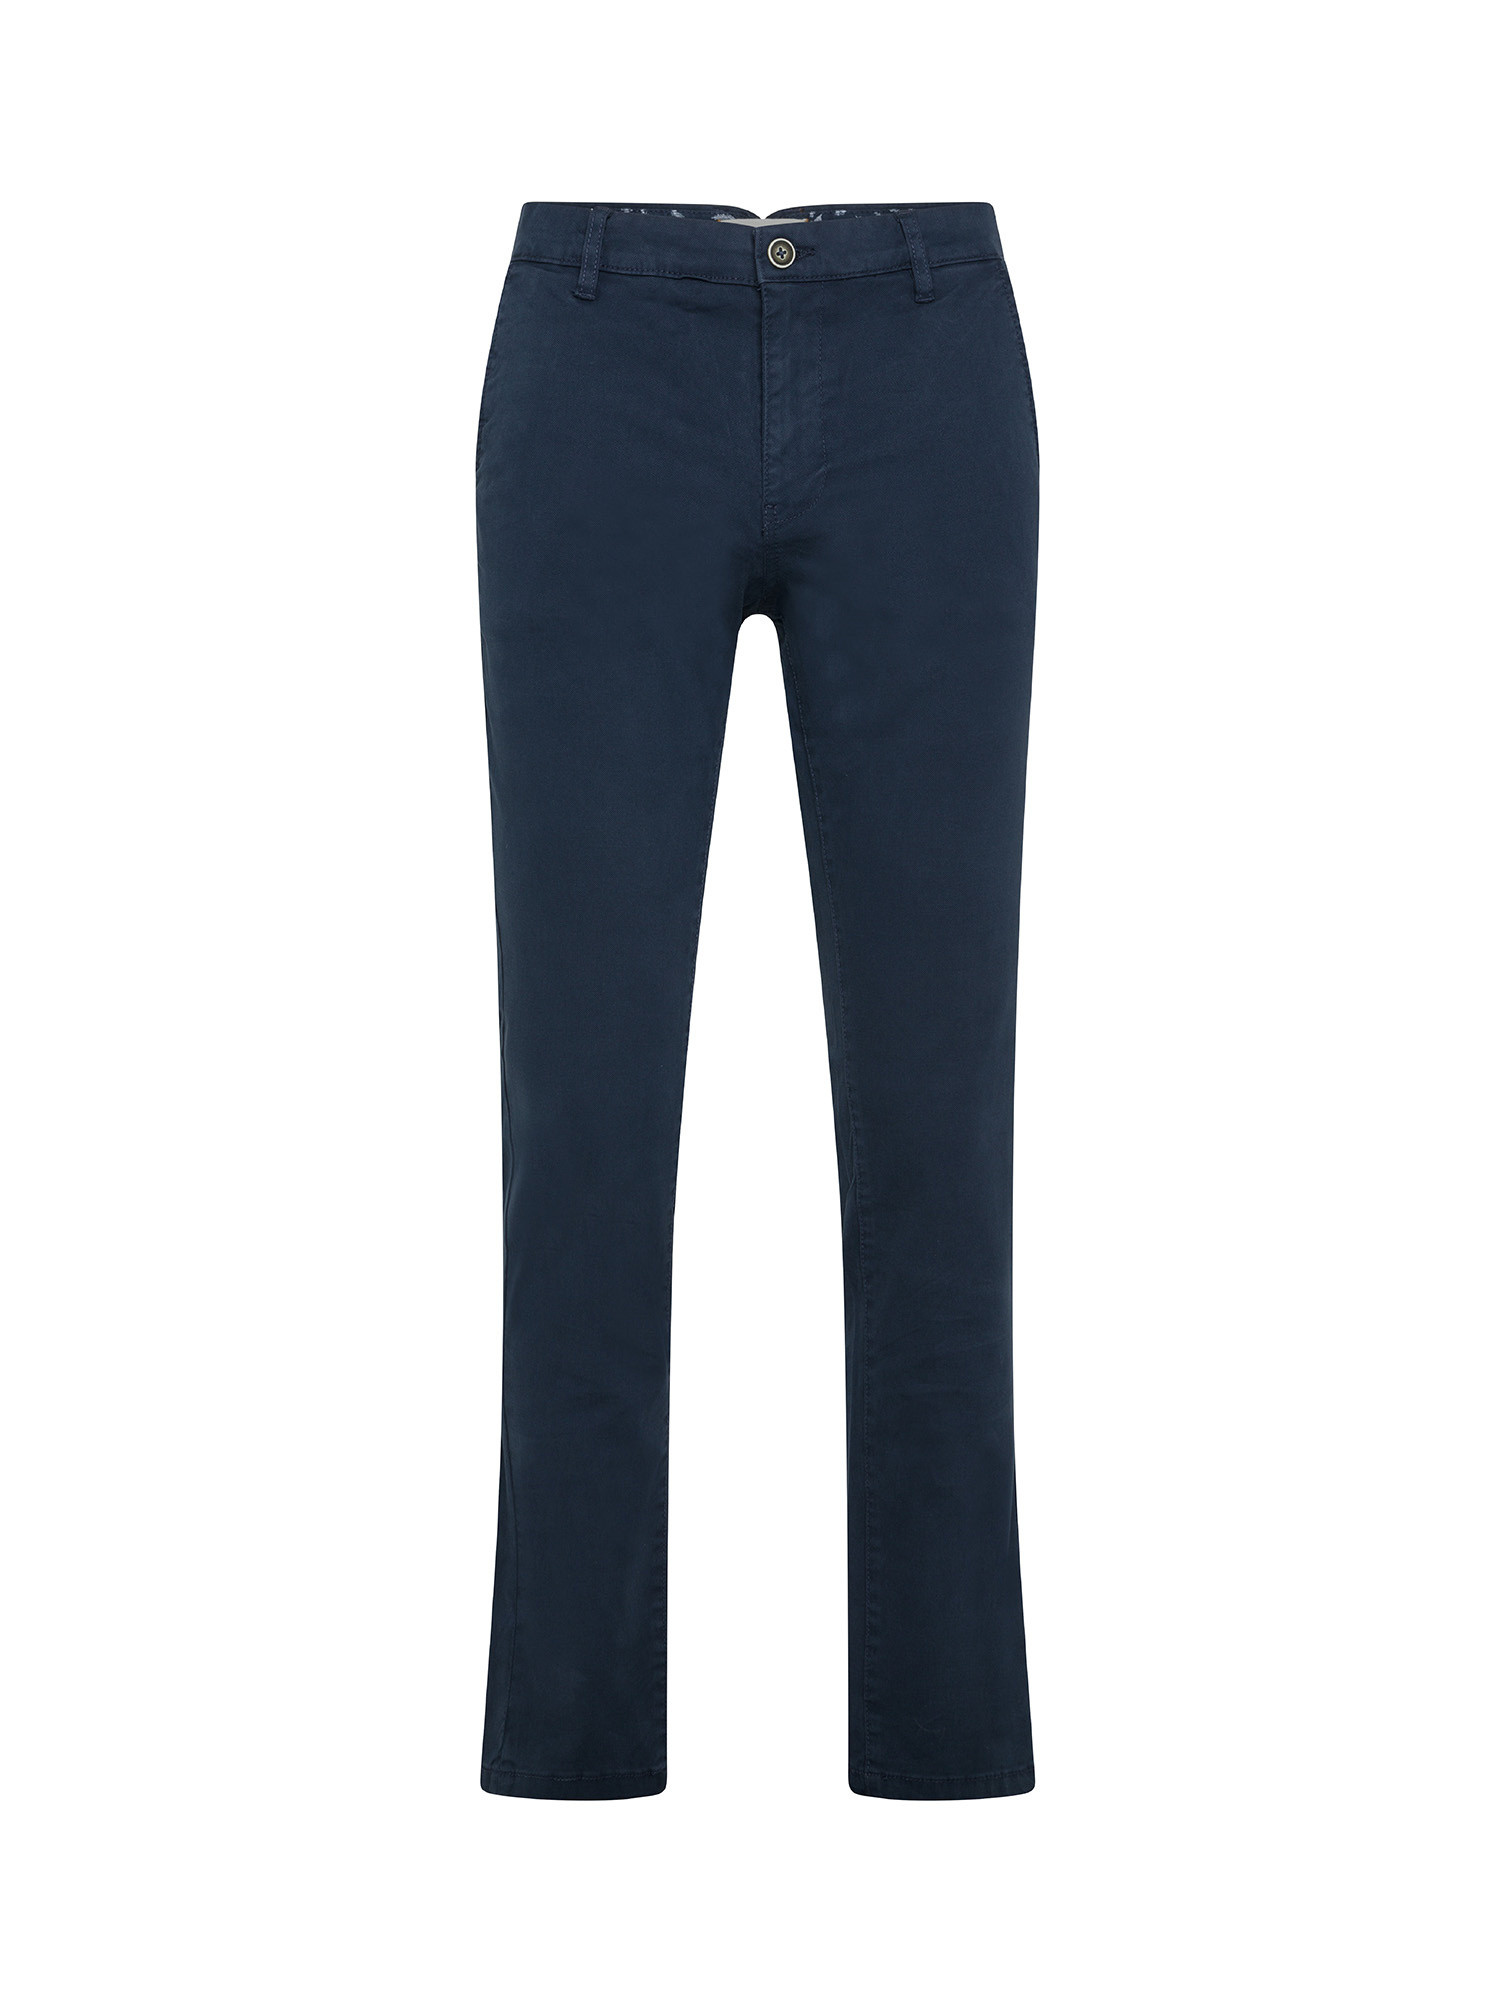 Jack & Jones - Pantaloni chino slim fit, Blu, large image number 0